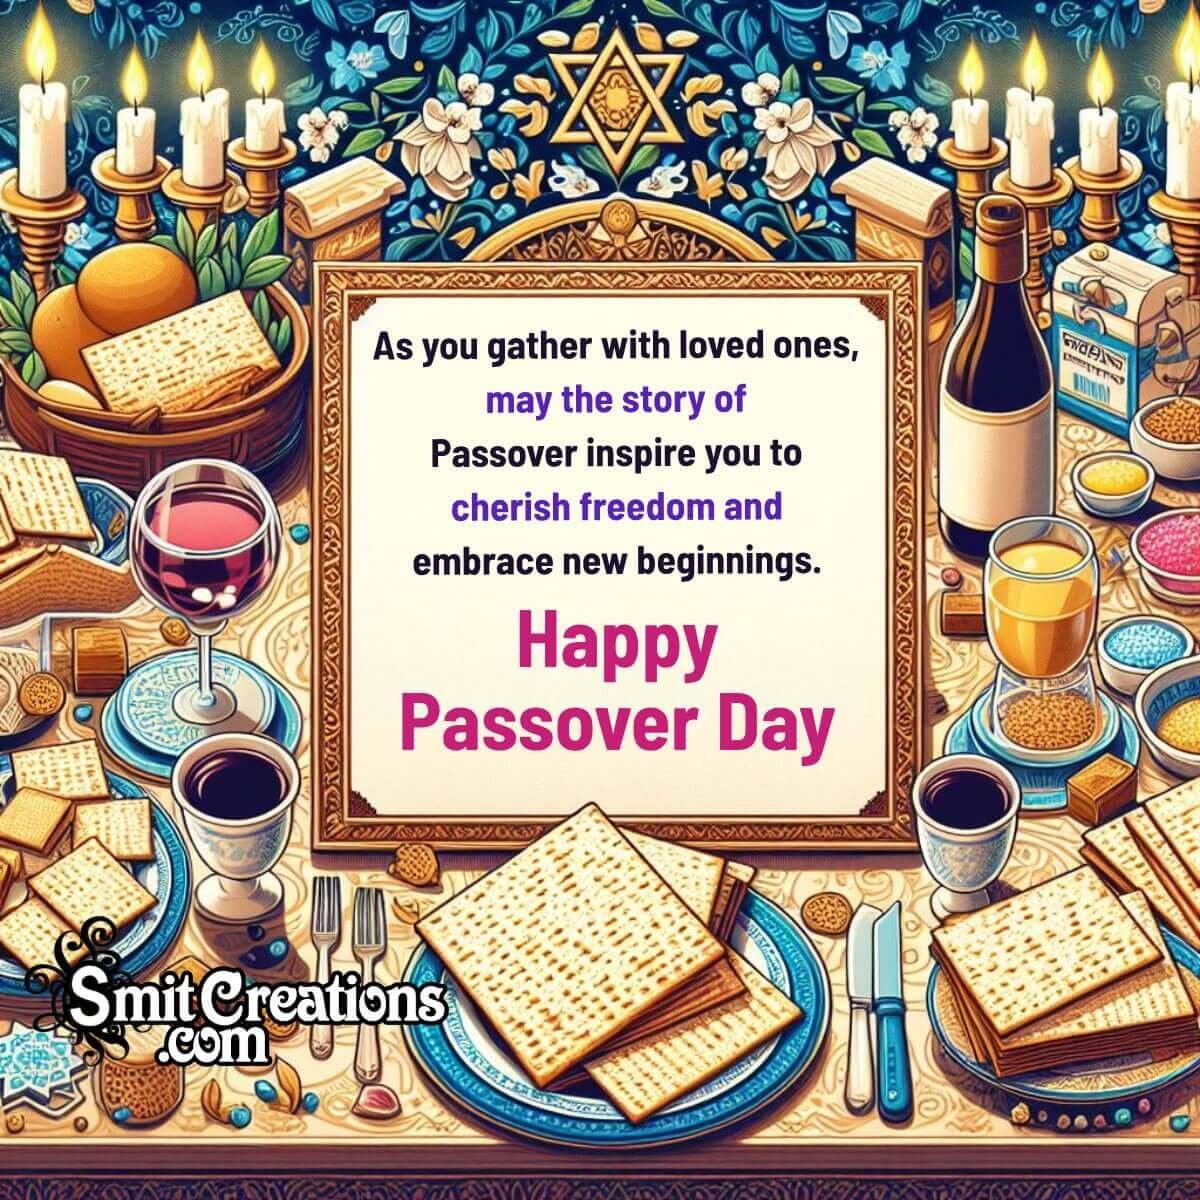 Happy Passover Day Wishing Image